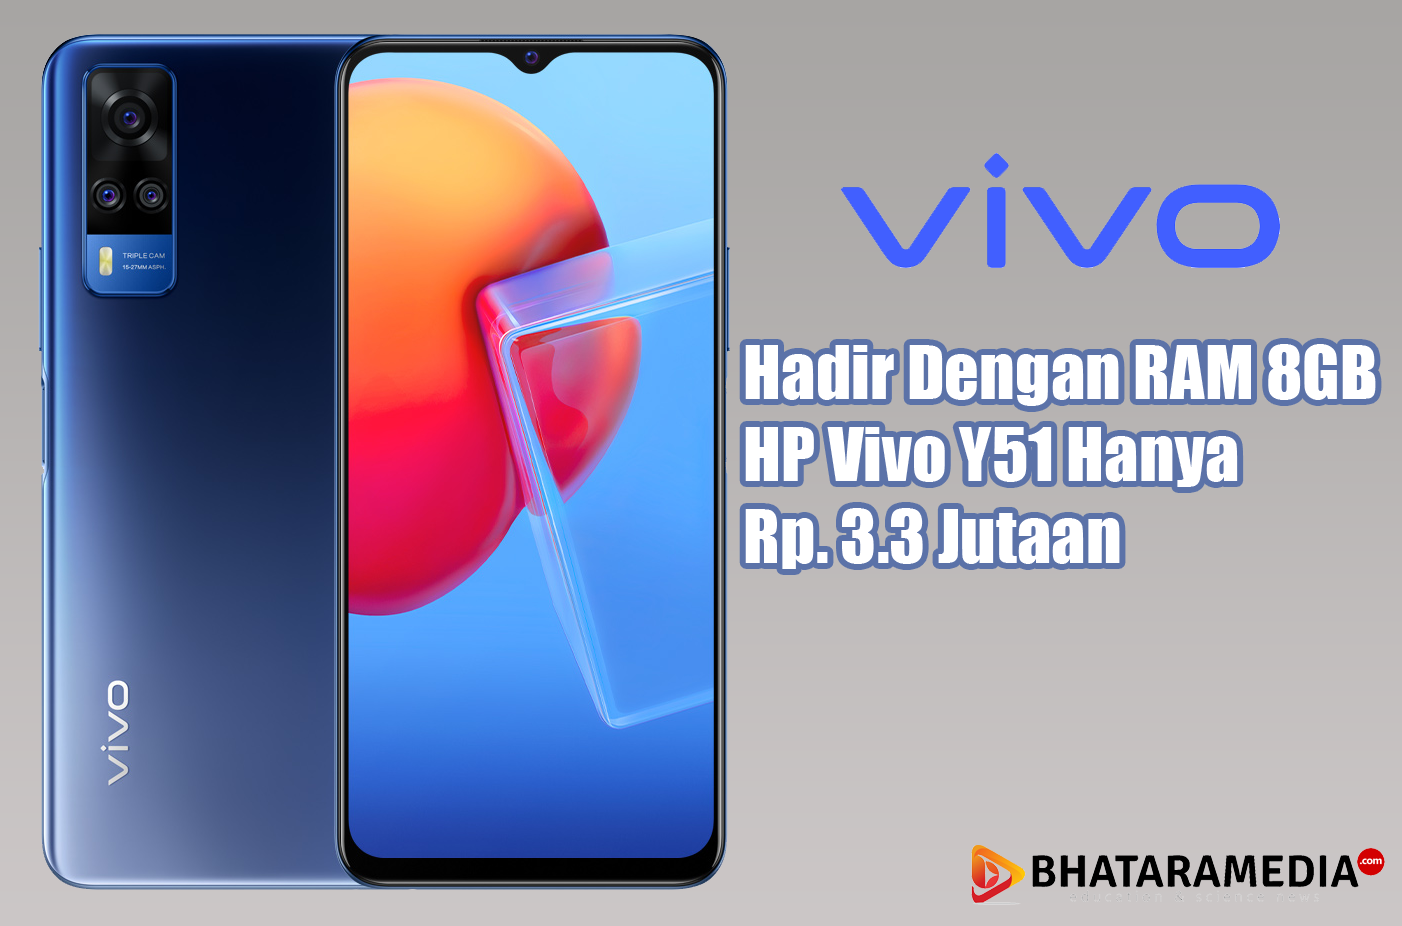 Hadir Dengan RAM 8GB, HP Vivo Y51 Hanya Rp. 3.3 Jutaan